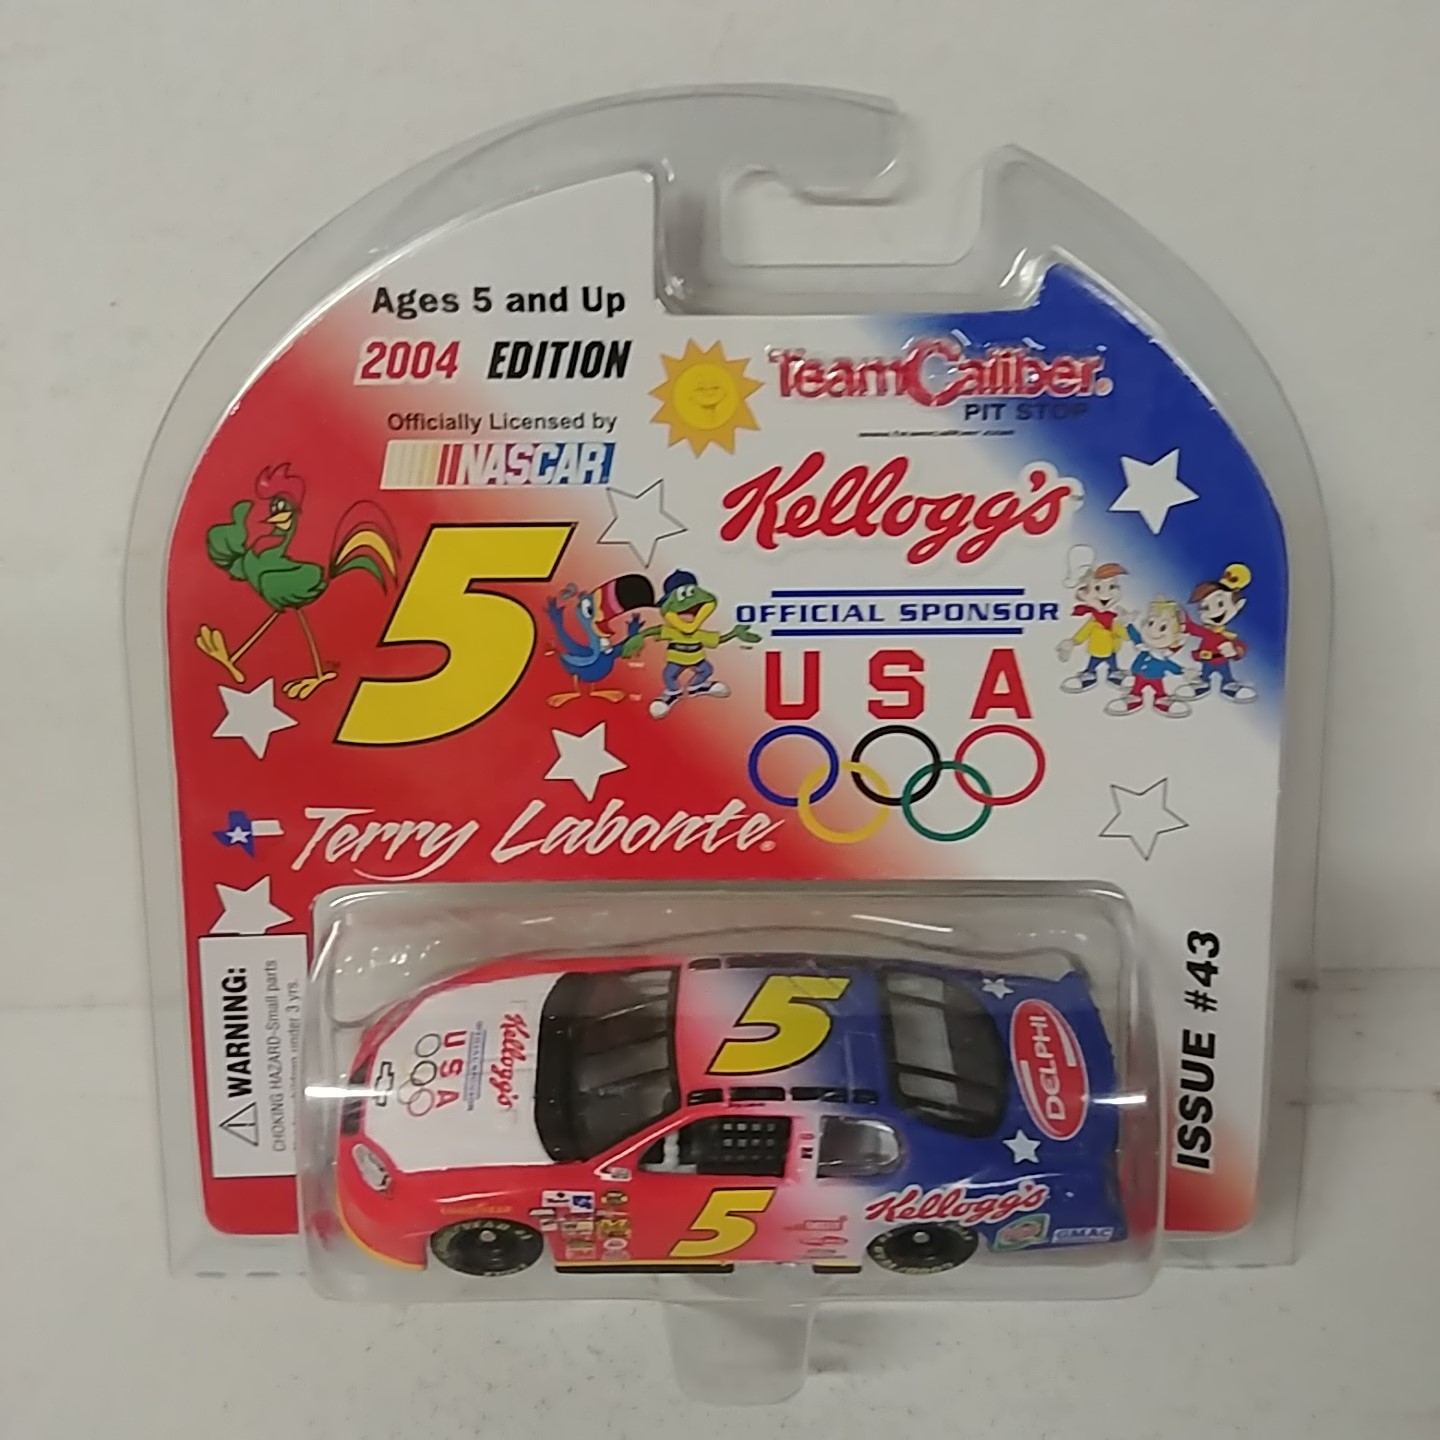 2004 Terry Labonte 1/64th Kelloggs "USA Olympics" Pitstop Series car